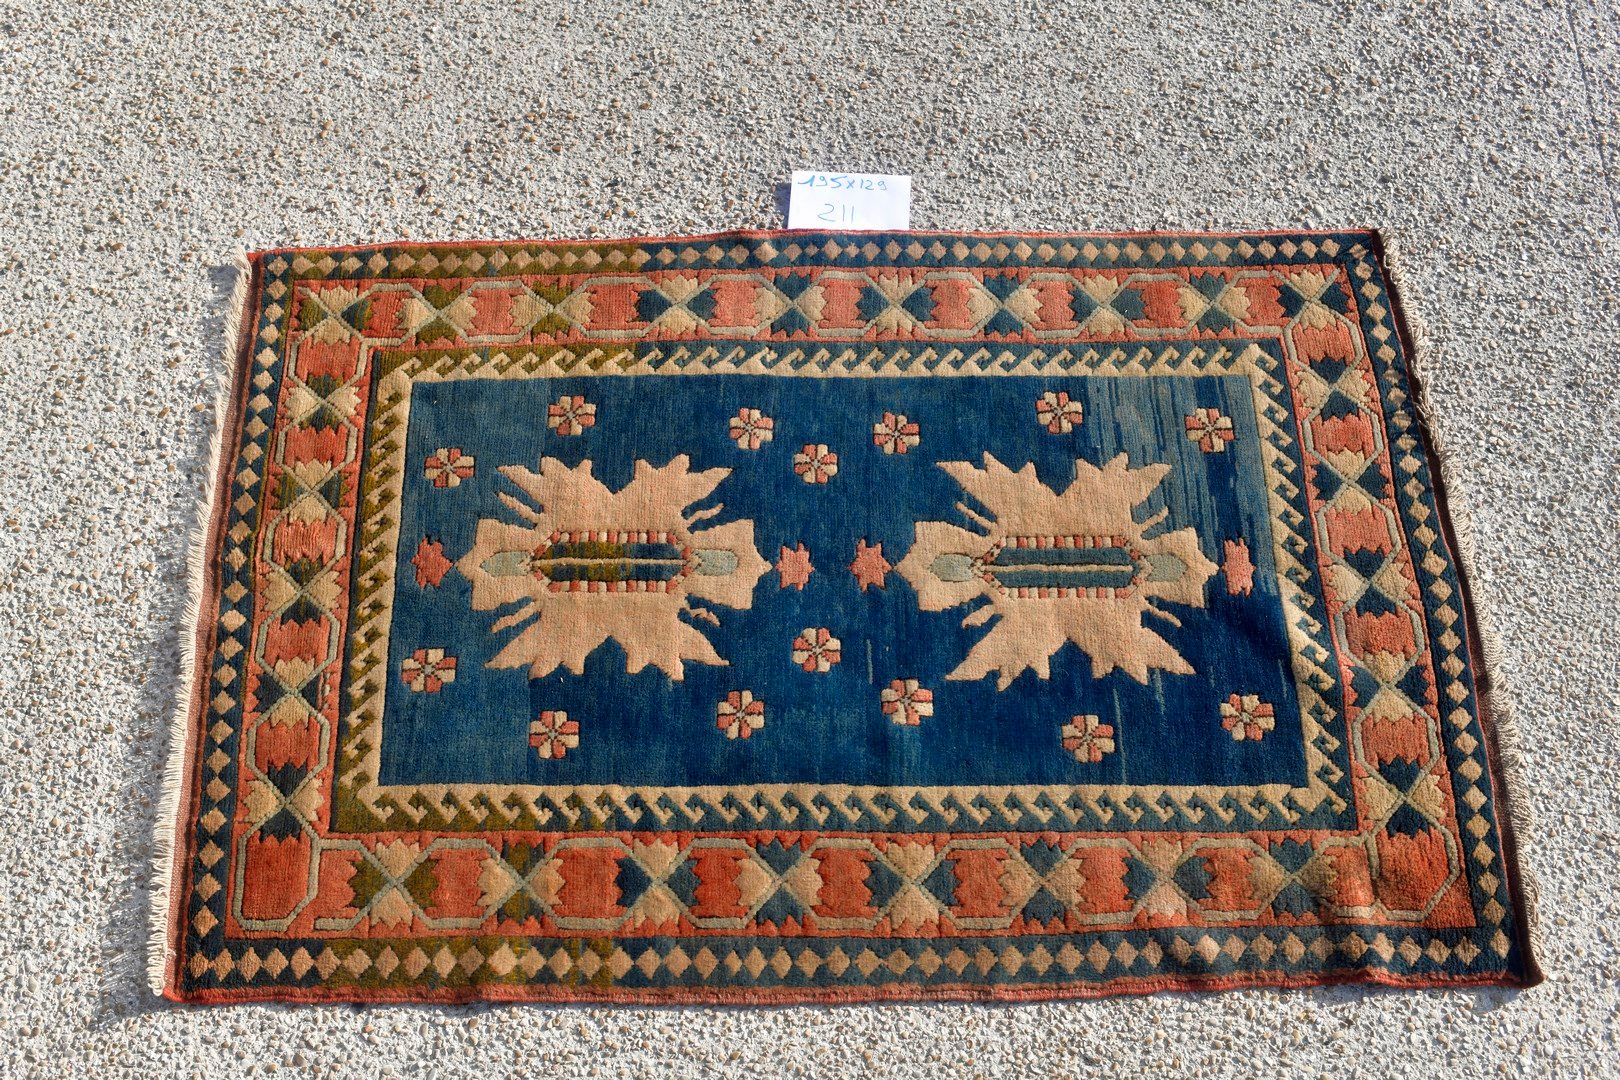 Null 科尼亚（土耳其），约1980年。

羊毛基础上的羊毛丝绒。

普鲁士蓝abarshé领域，装饰着两个鲑鱼粉色的蝴蝶造型的奖章。

状况良好。

195&hellip;